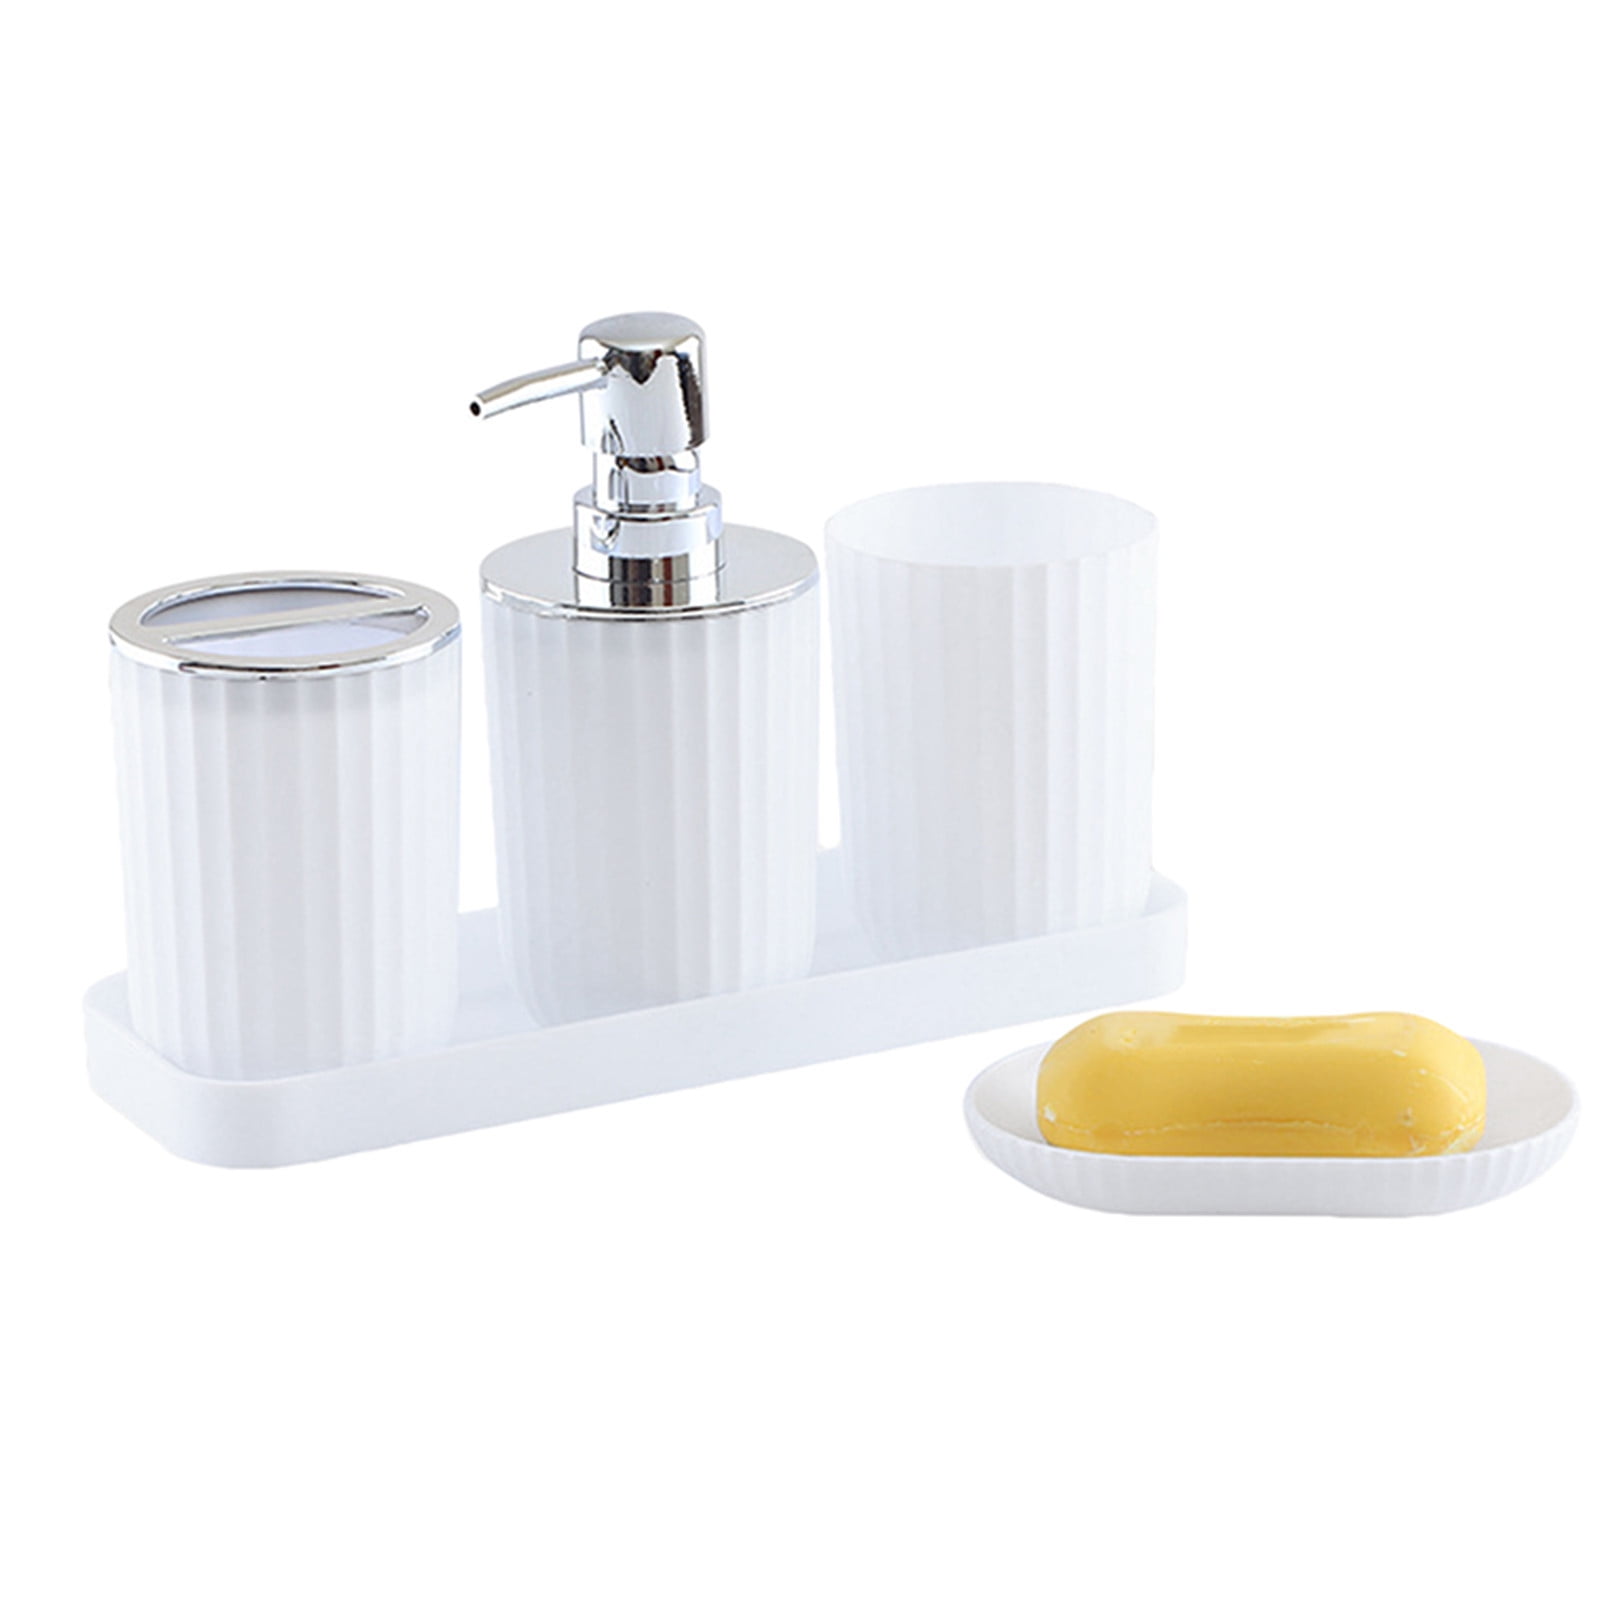 PureClean™ Soap Dispenser - TOILET BRUSH AND HOLDER SET – Gulf Deals LLC